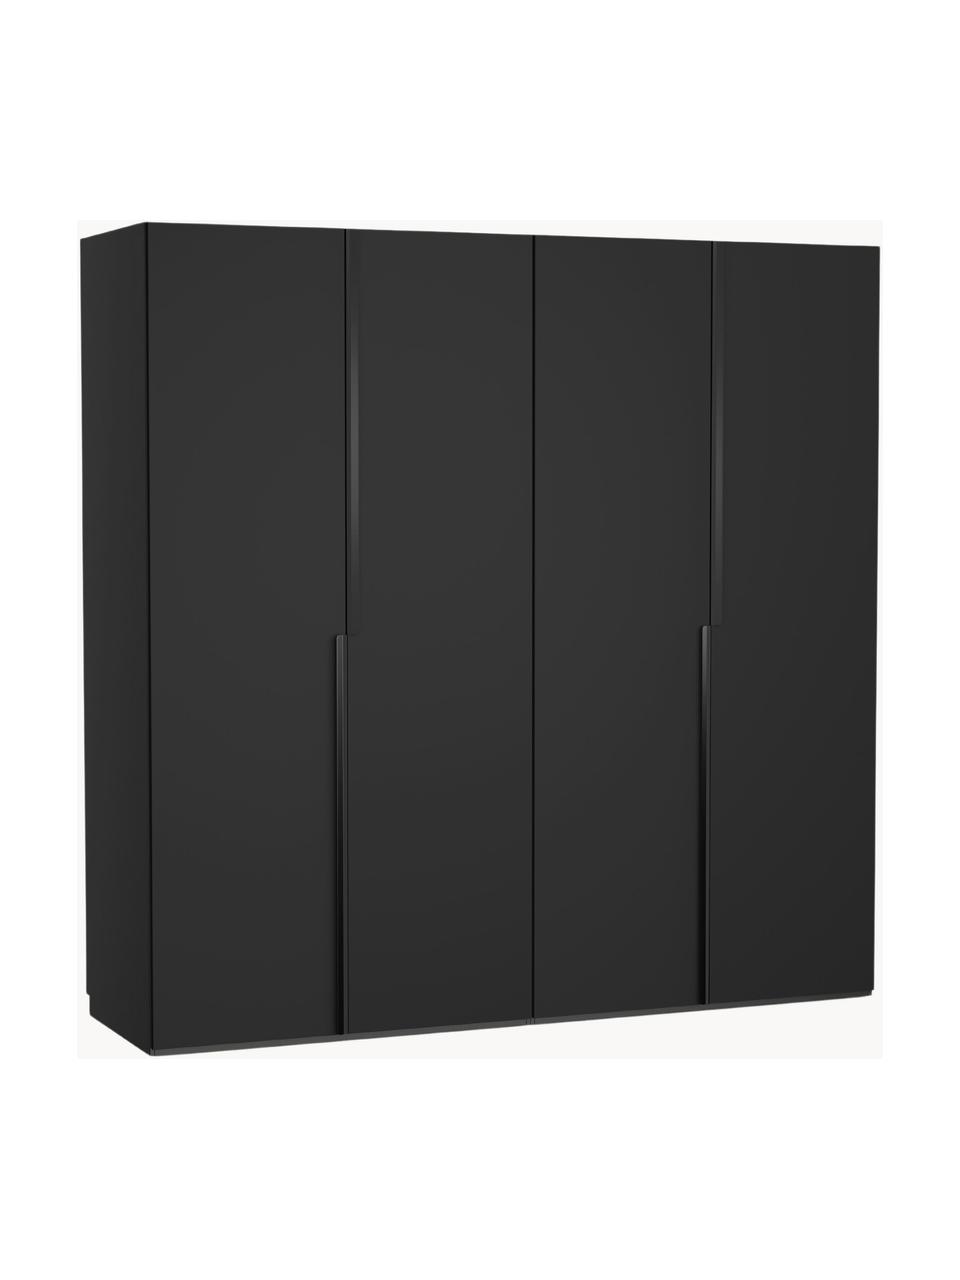 Modulární skříň s otočnými dveřmi Leon, šířka 200 cm, více variant, Černá, Interiér Classic, Š 200 x V 200 cm